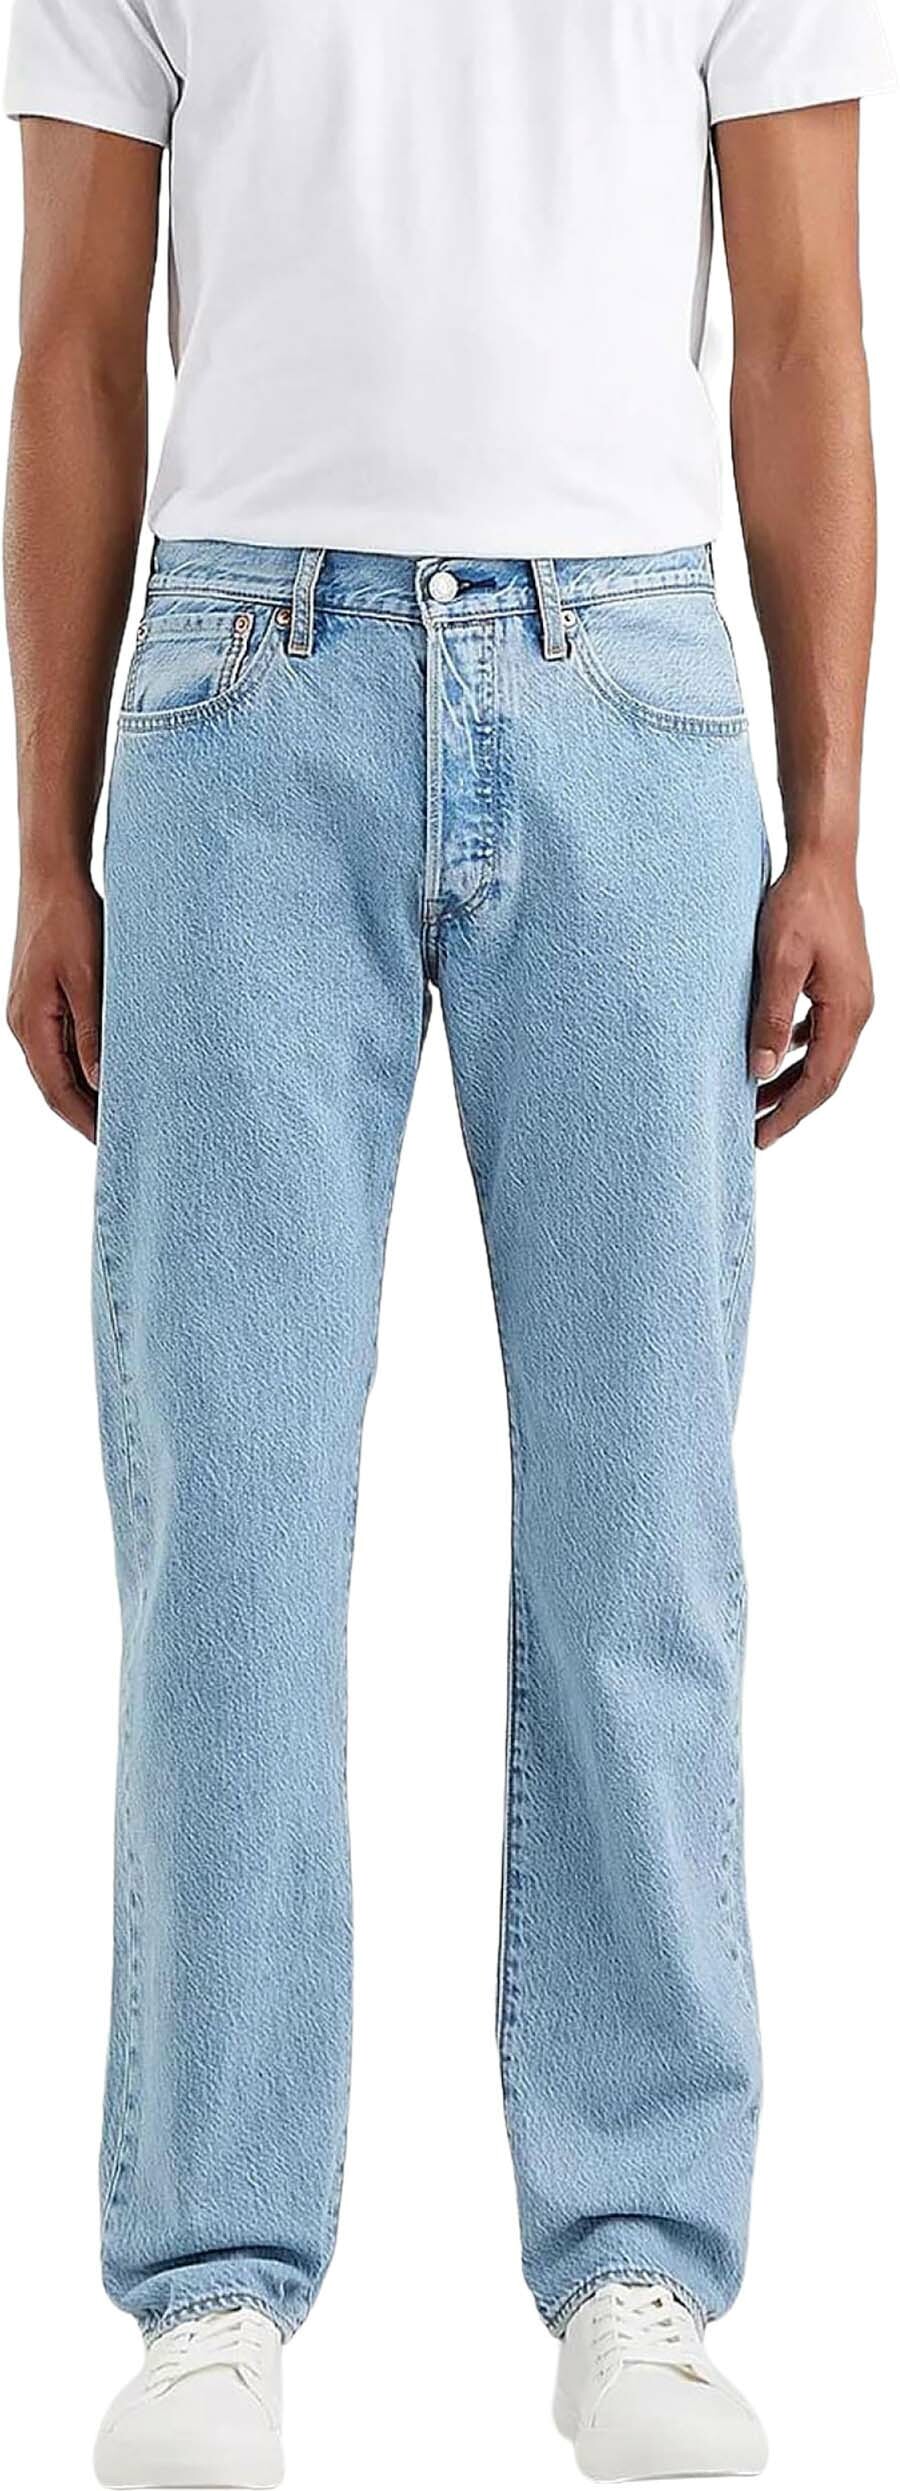 джинсы левис